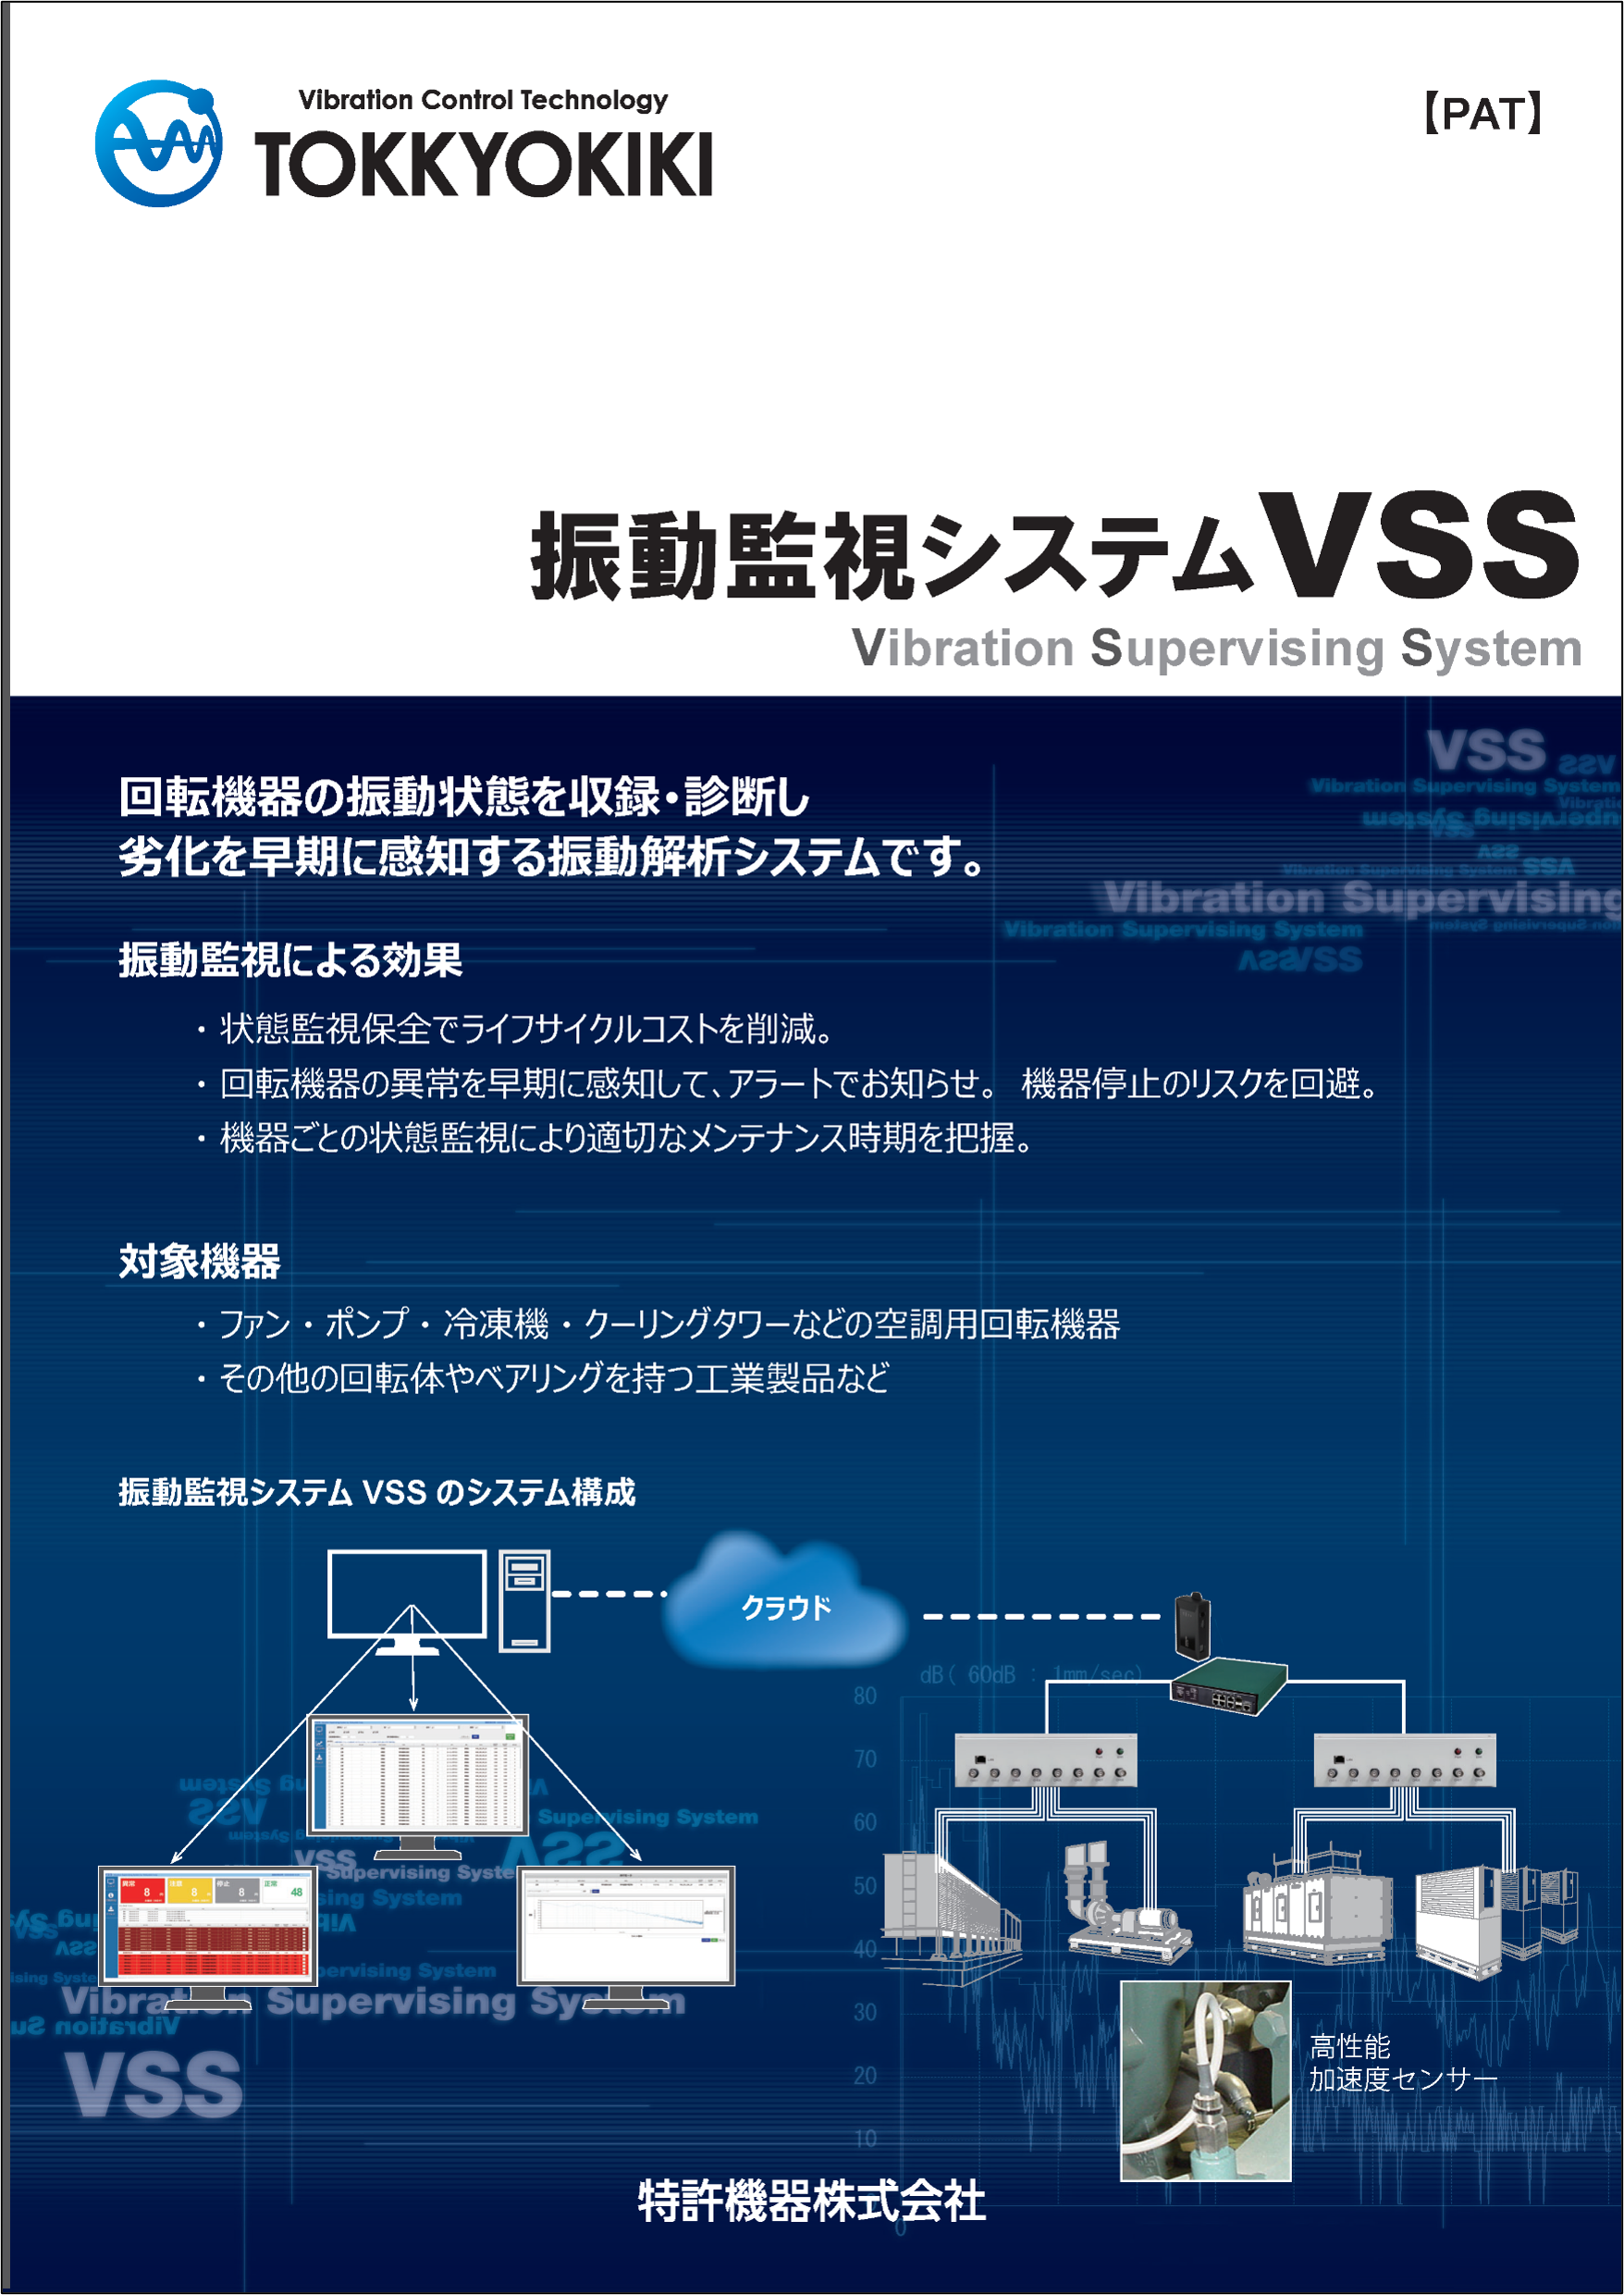 Vibration monitoring system VSS